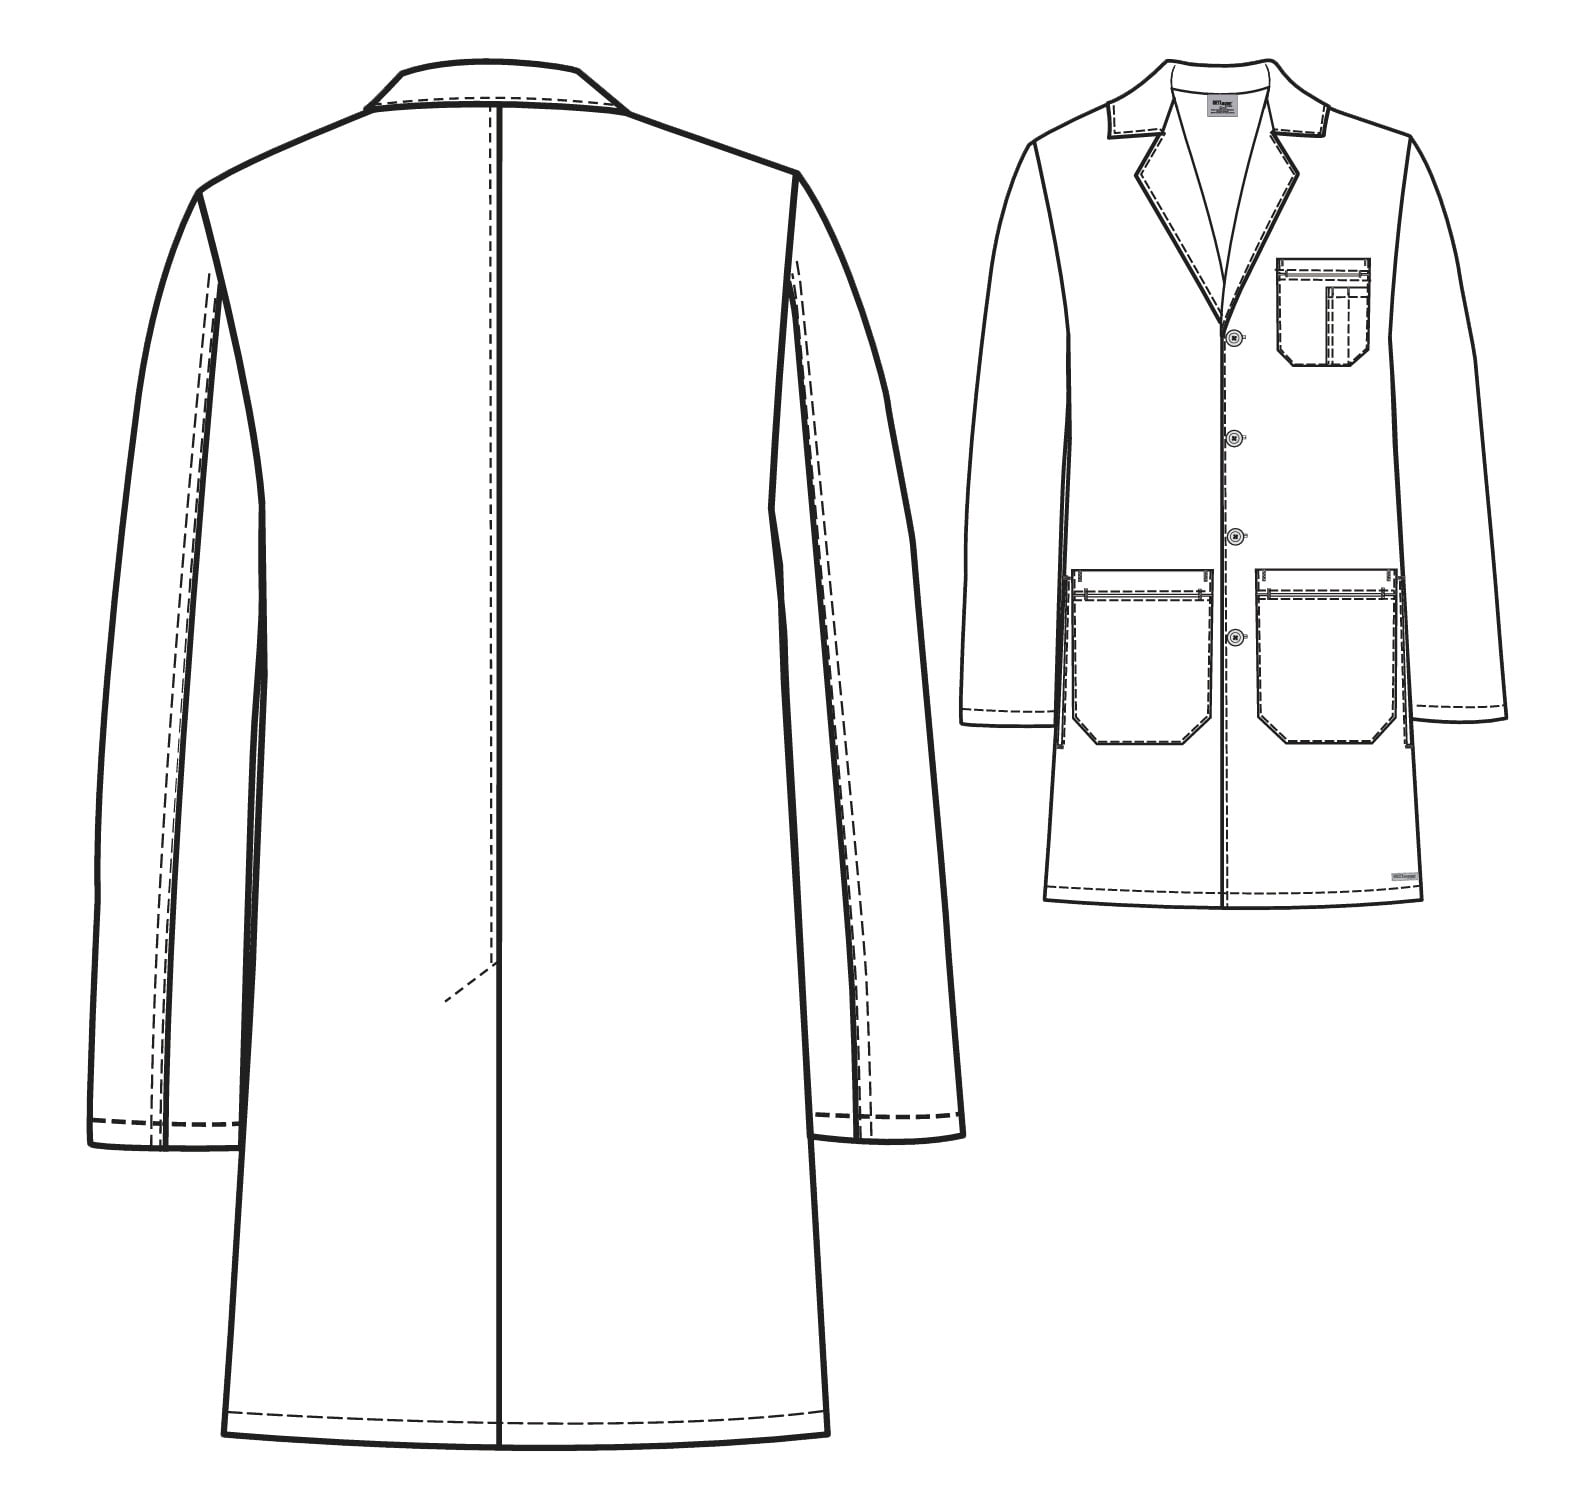 Buy Grey's Anatomy Men's Lab Coat | MedicoStore مدكو ستور